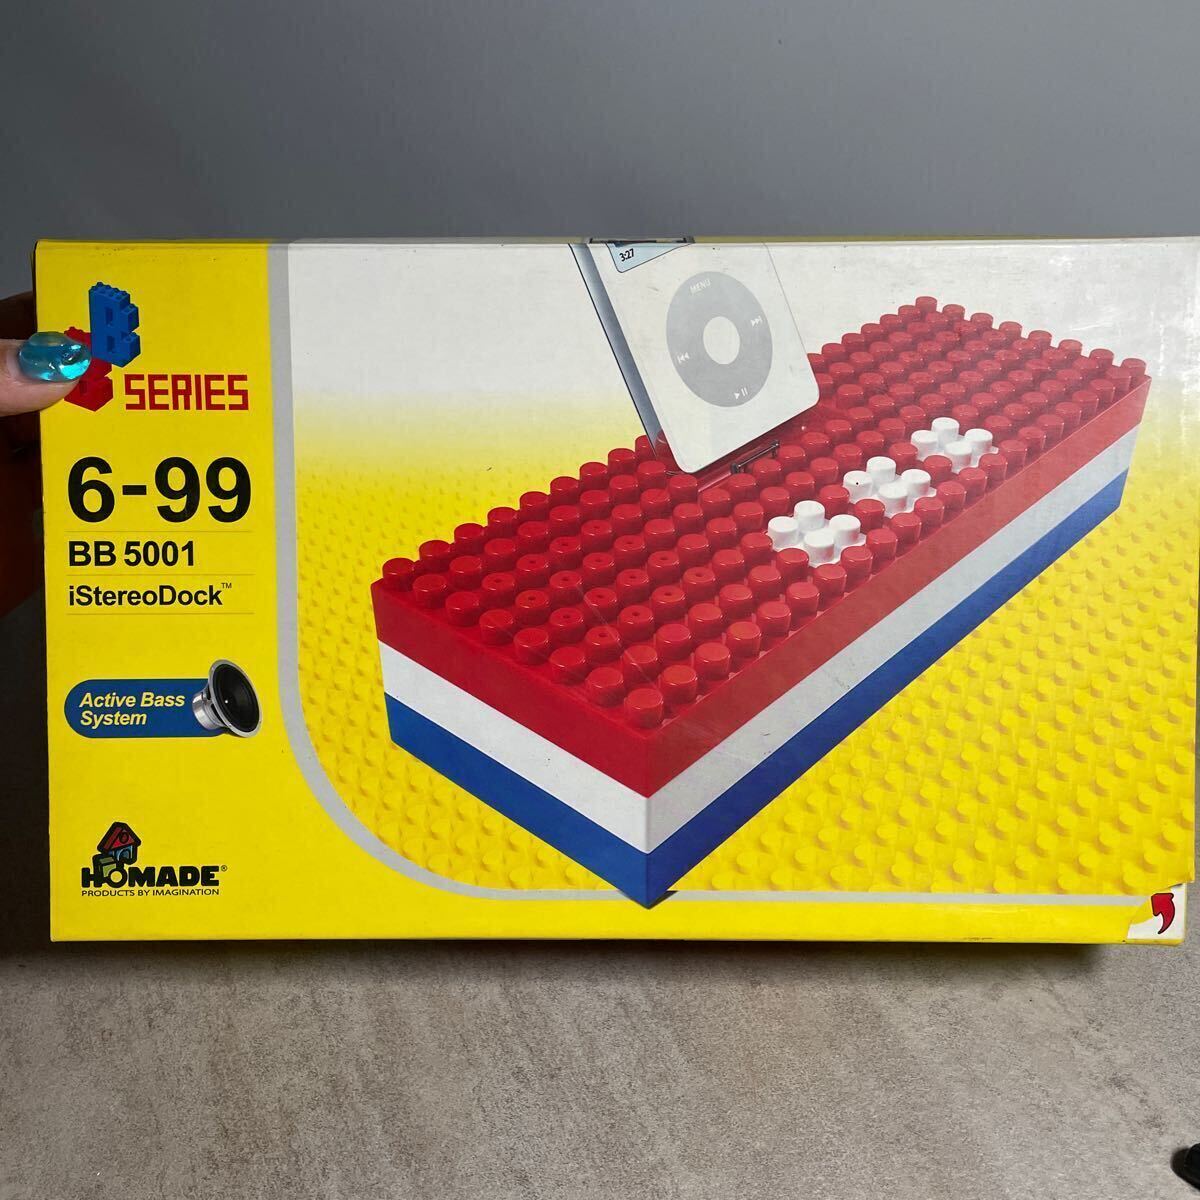 hz95 新品 未使用品 LEGO レゴ レゴブロックipod スピーカー 6-99 BB 5001 大型ブロックスピーカー 便利 オシャレ 黄色 ポータブル の画像2